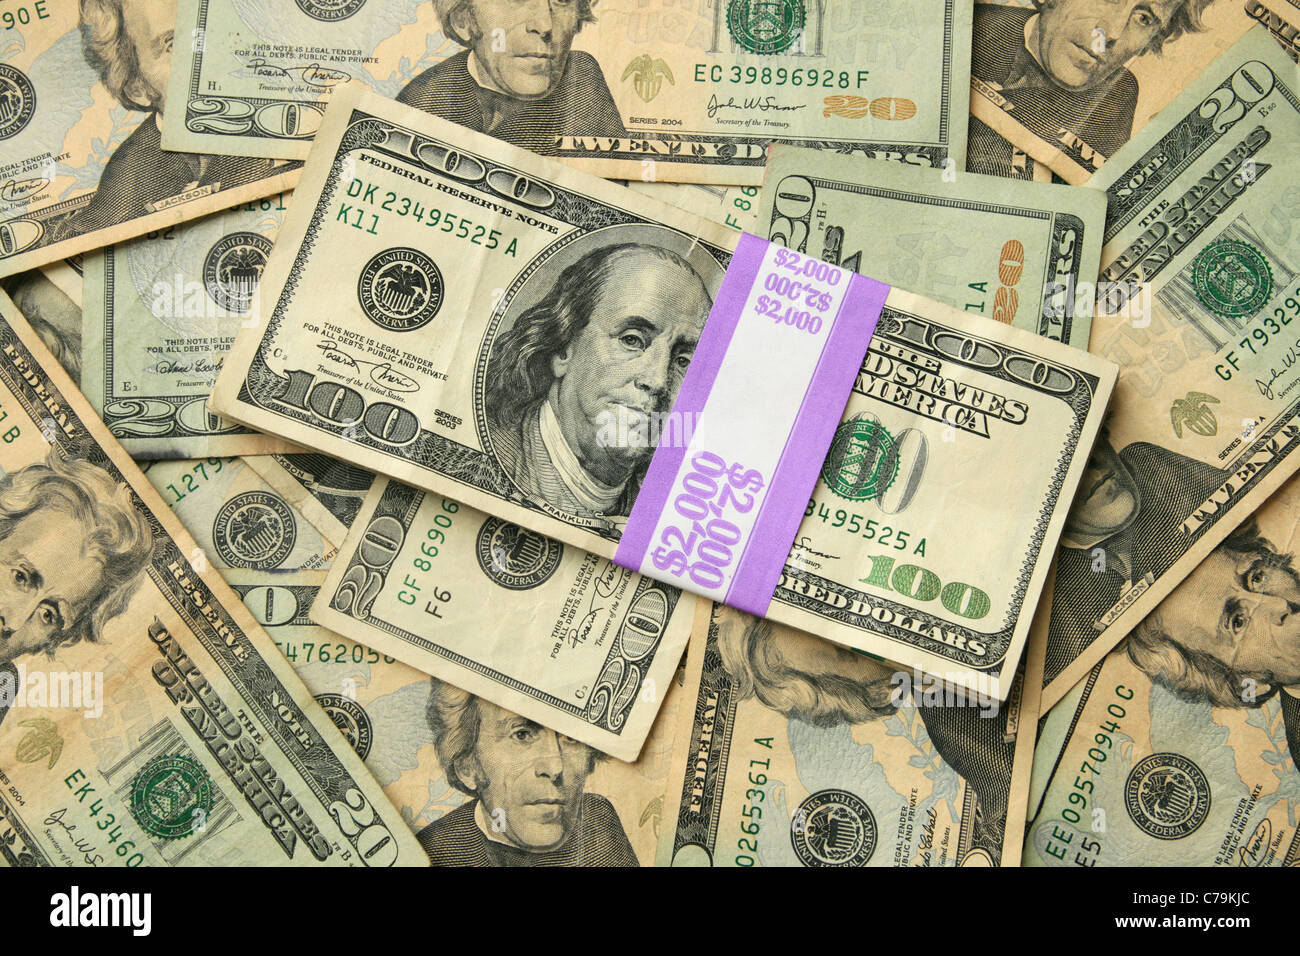 Two Thousand Dollars In 100 Bills On A Background Of Twenty Dollar Us Stock Photo Alamy